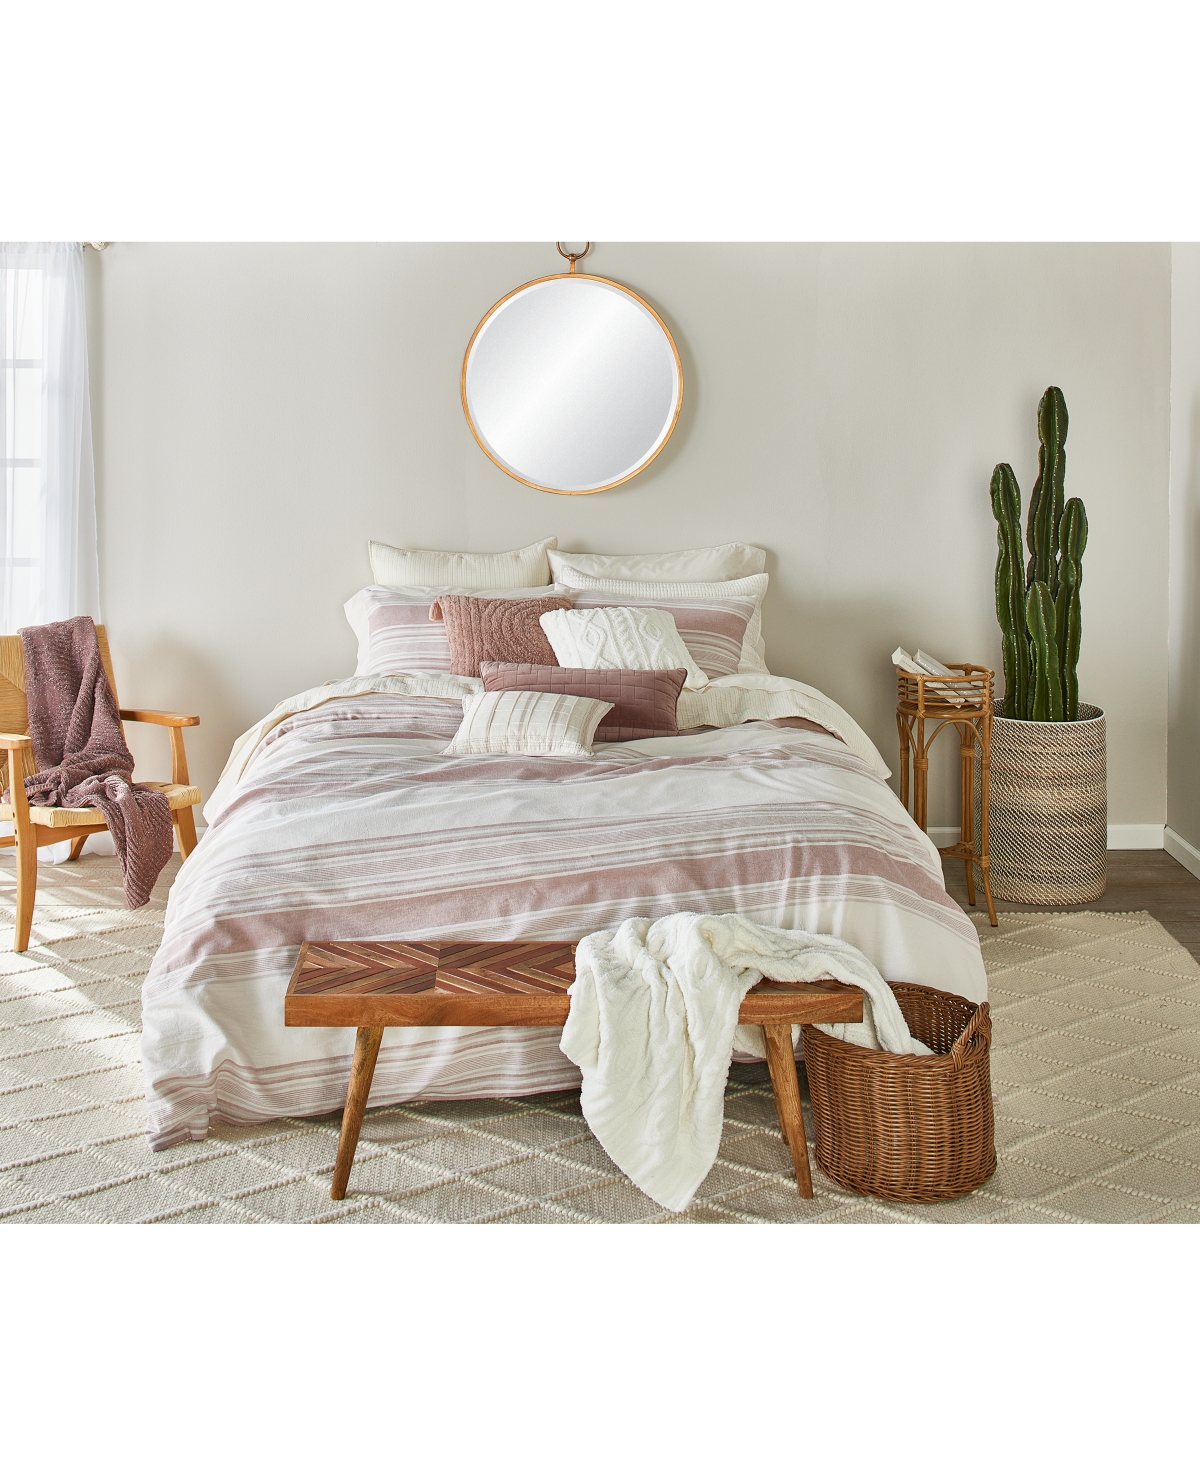 Splendid Tuscan Stripe 3 Piece Comforter Set, Full/queen Bedding In Sunset Multi